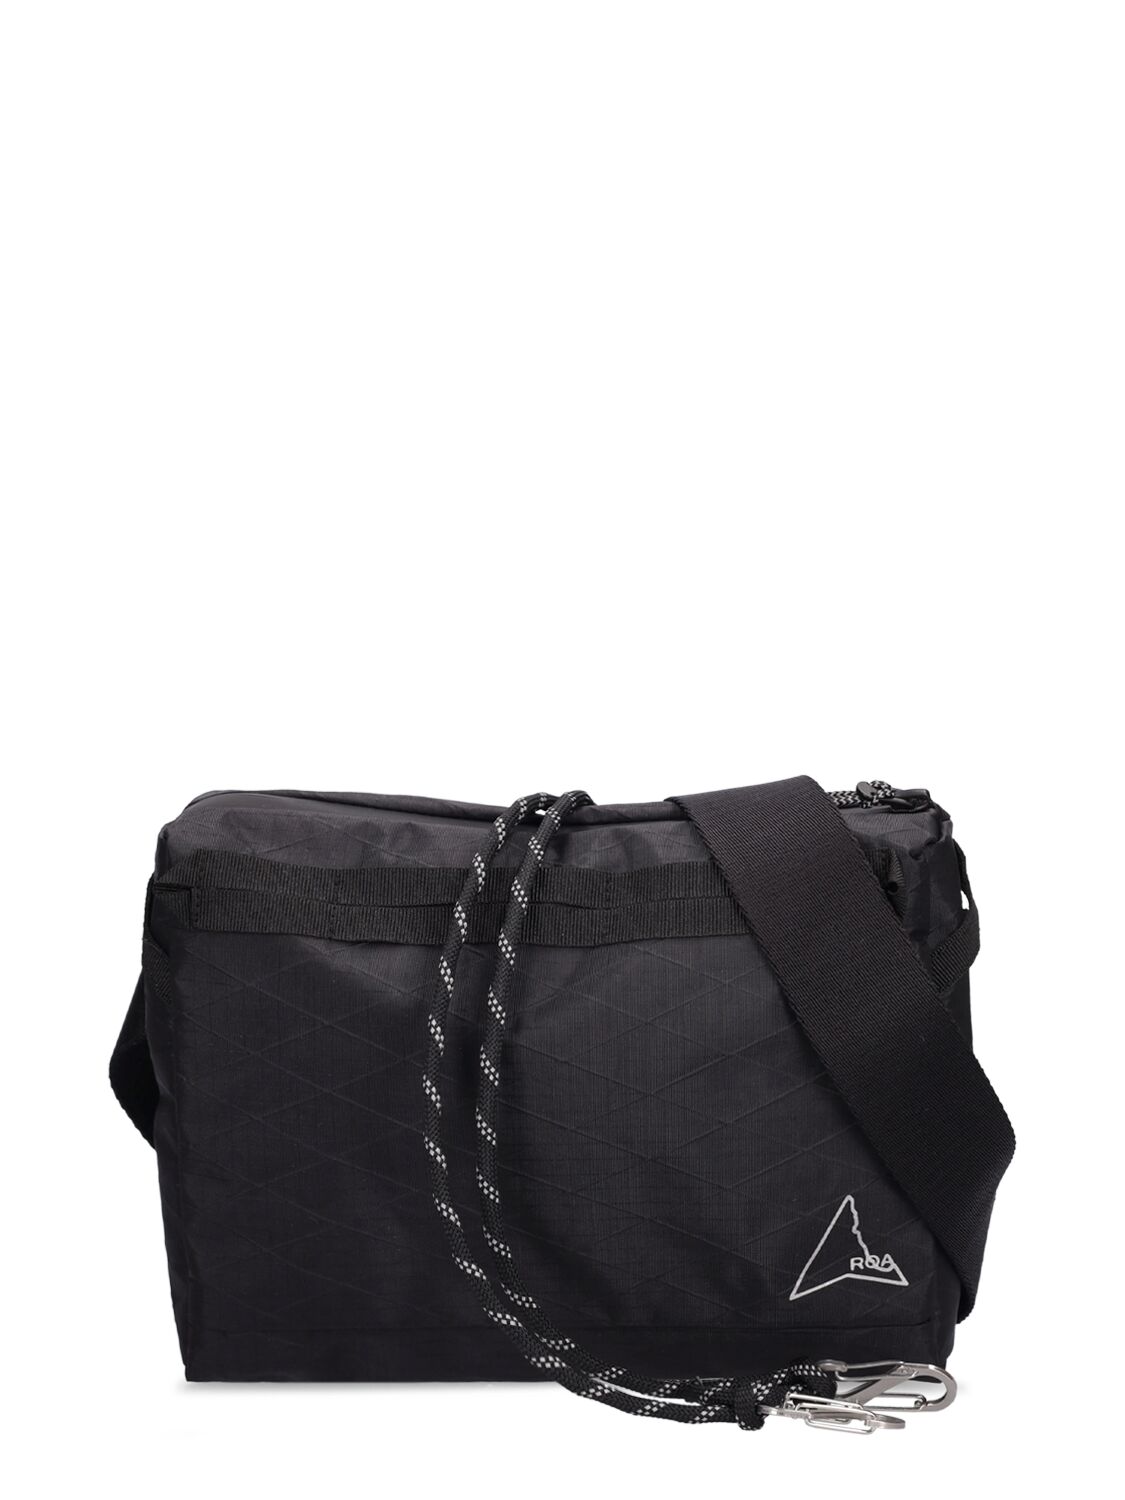 Roa Crossbody Bag In Black Xpack